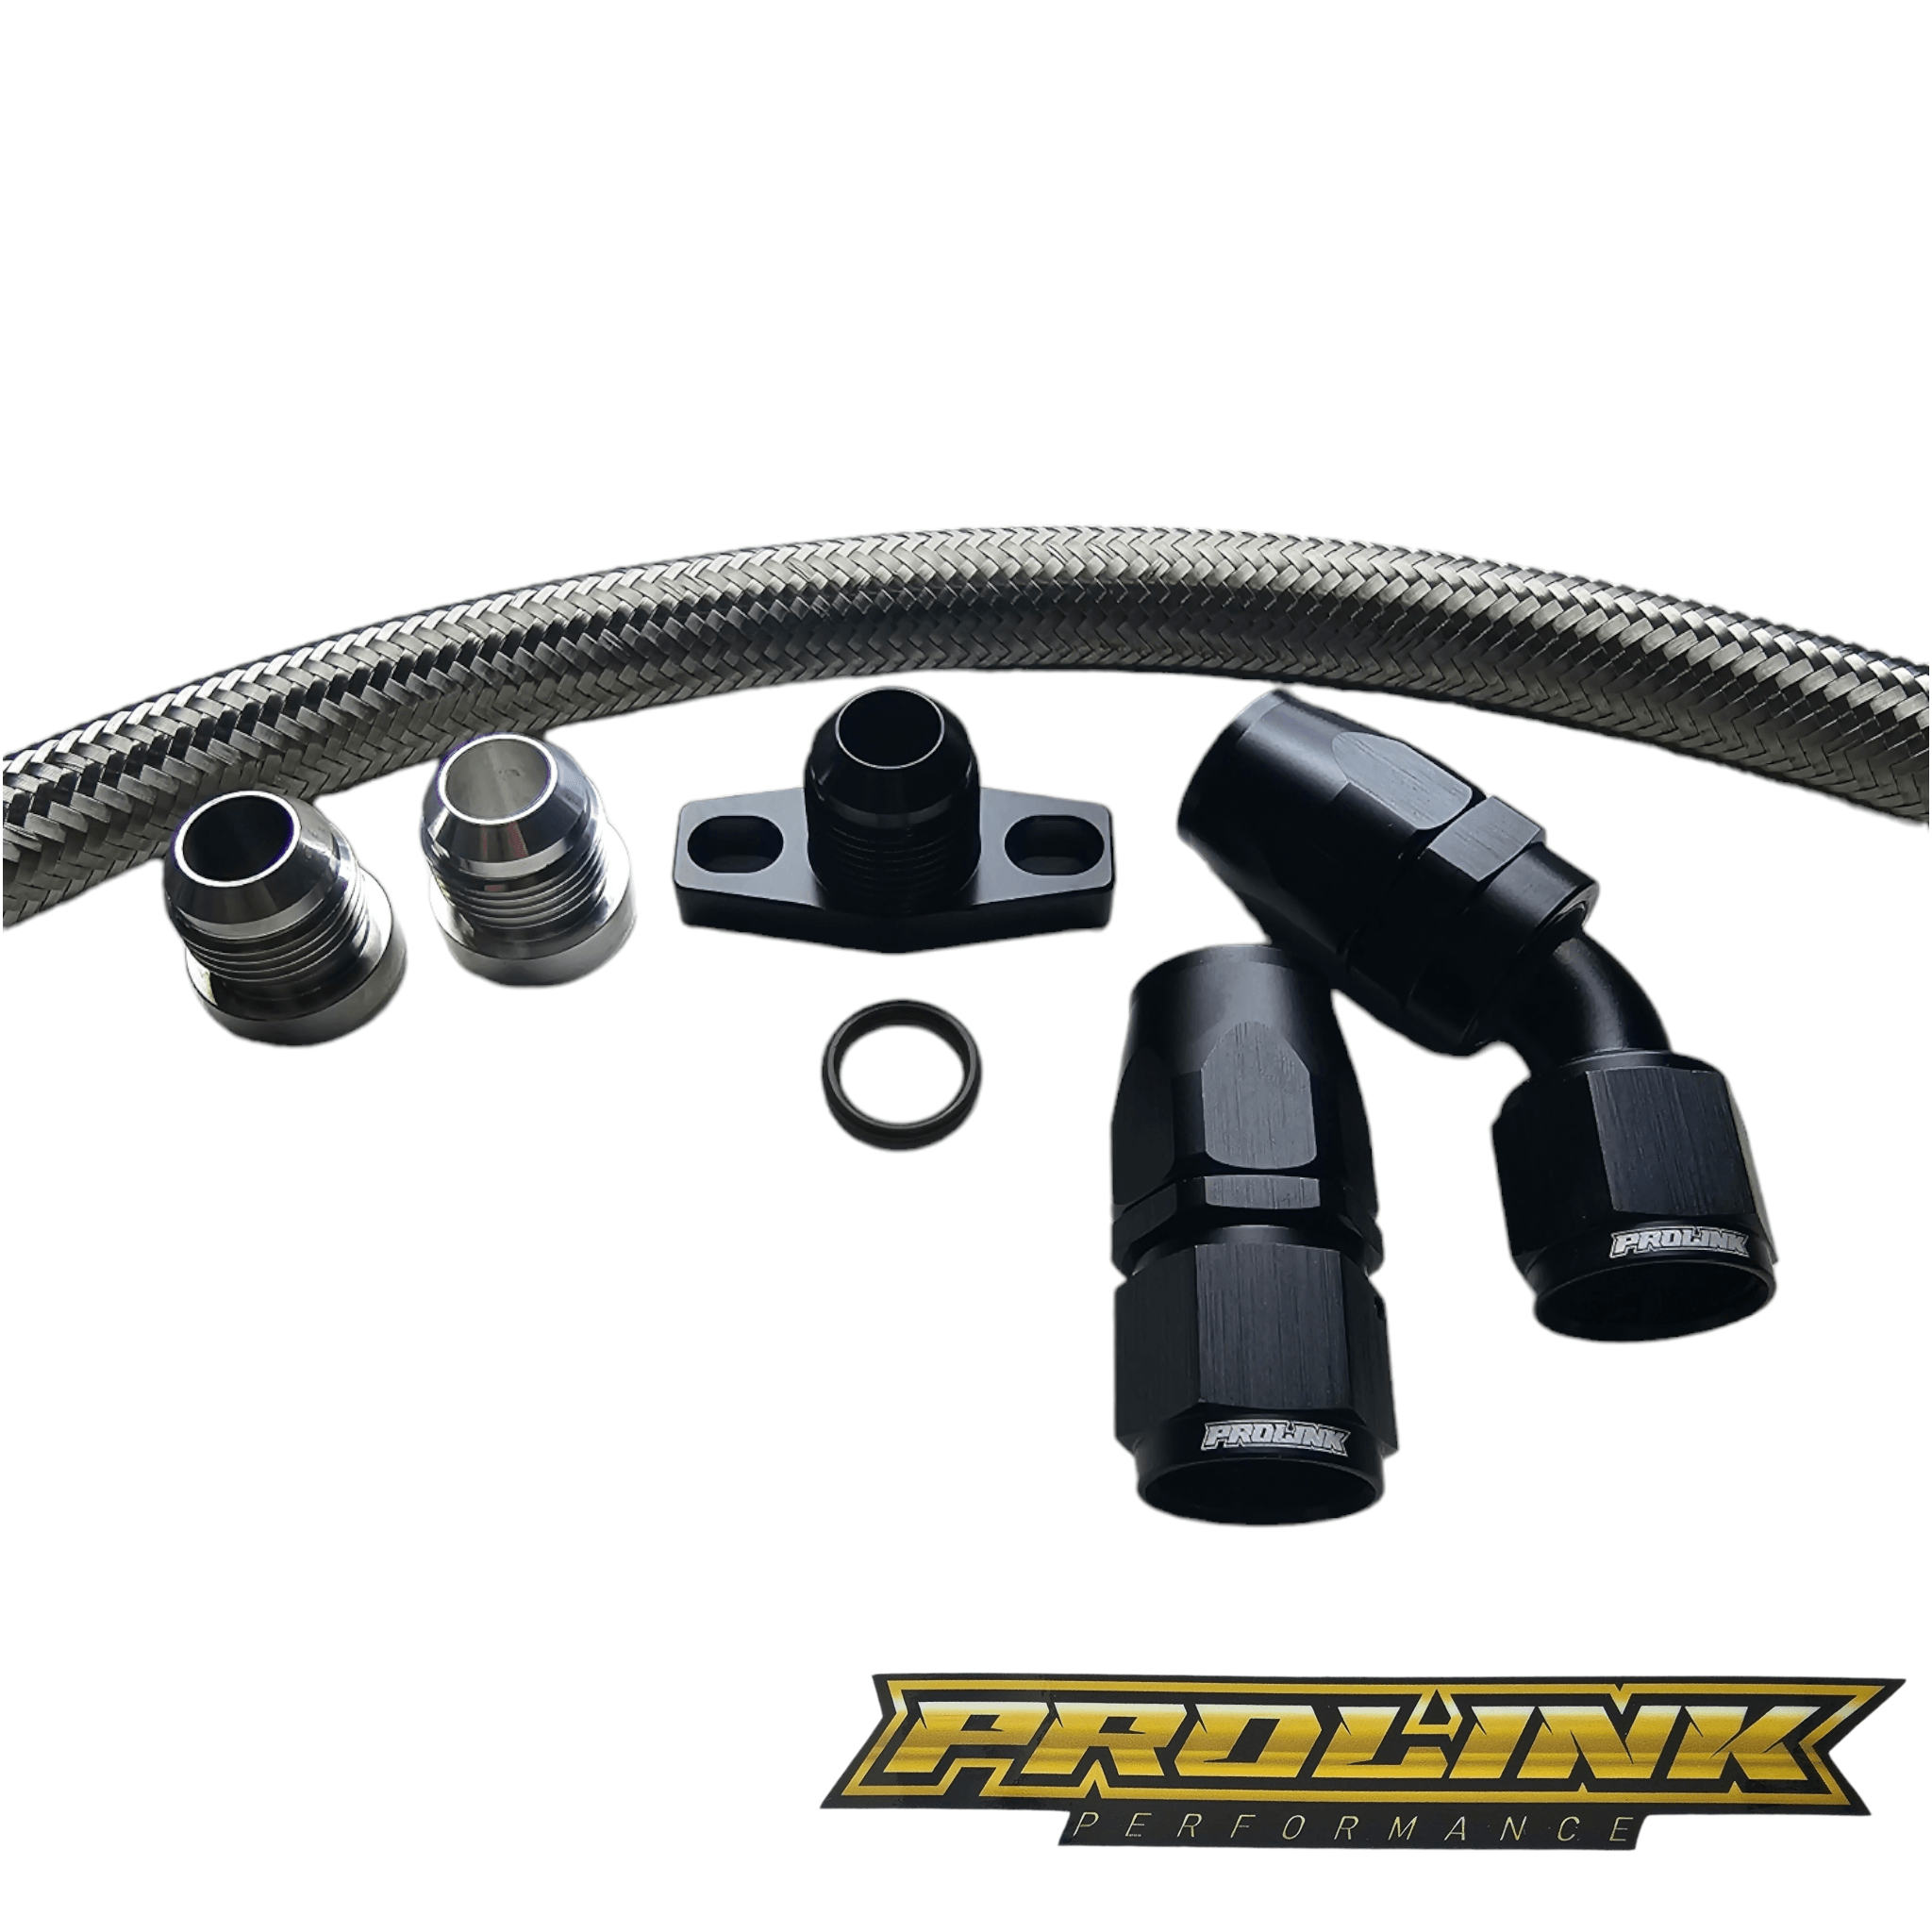 Prolink Universal Turbo Oil Drain Kit - Prolink Performance